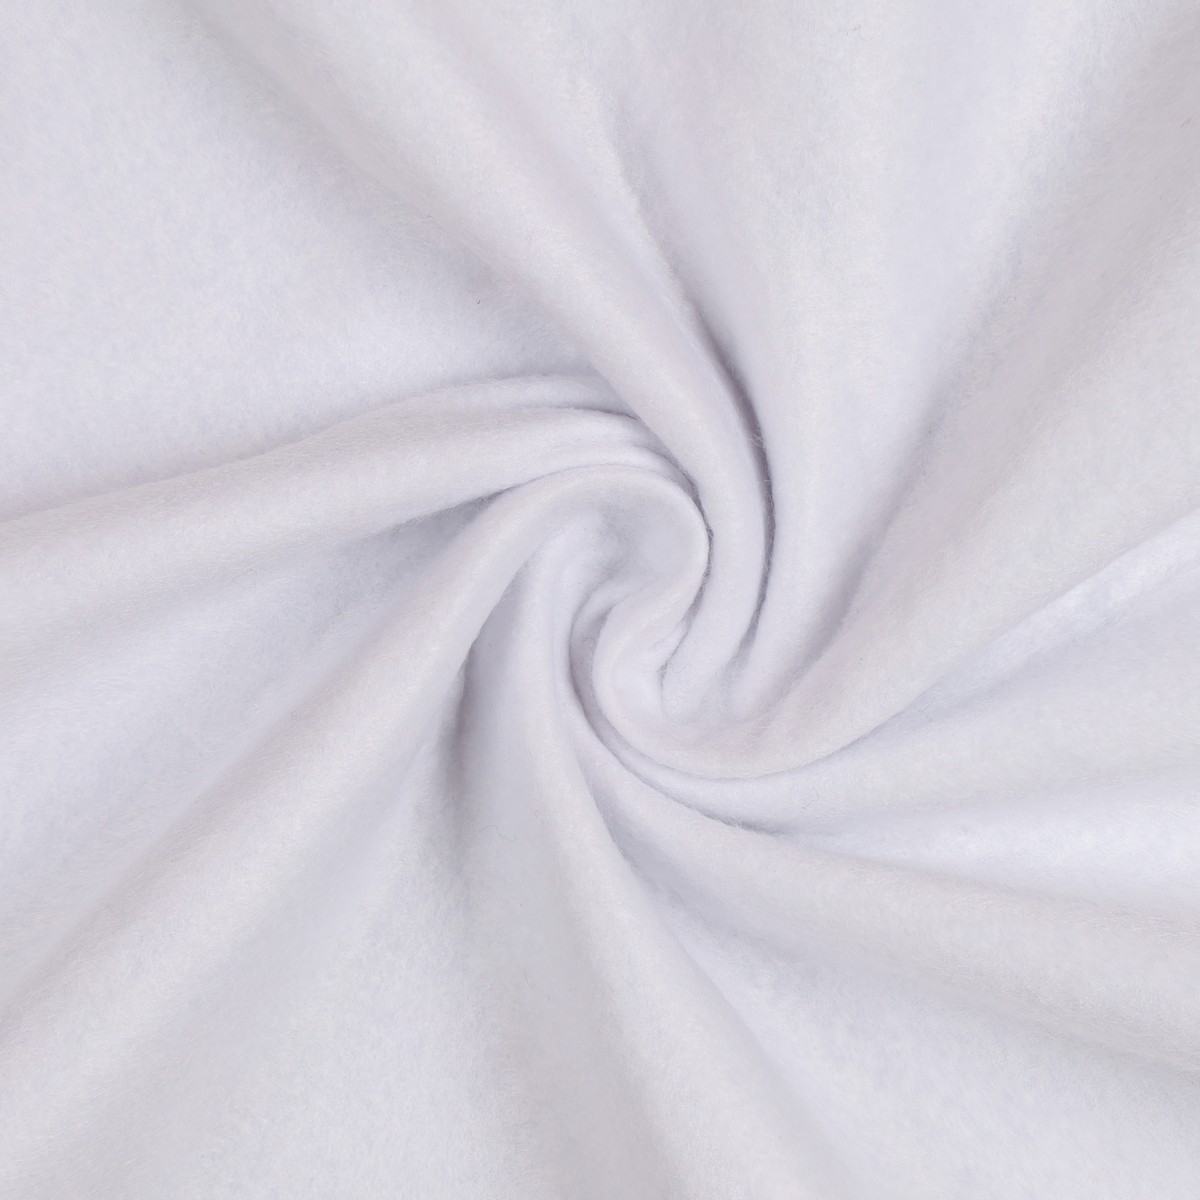 Pannelli Pannolenci - Colore Bianco - Misura 50x190cm 